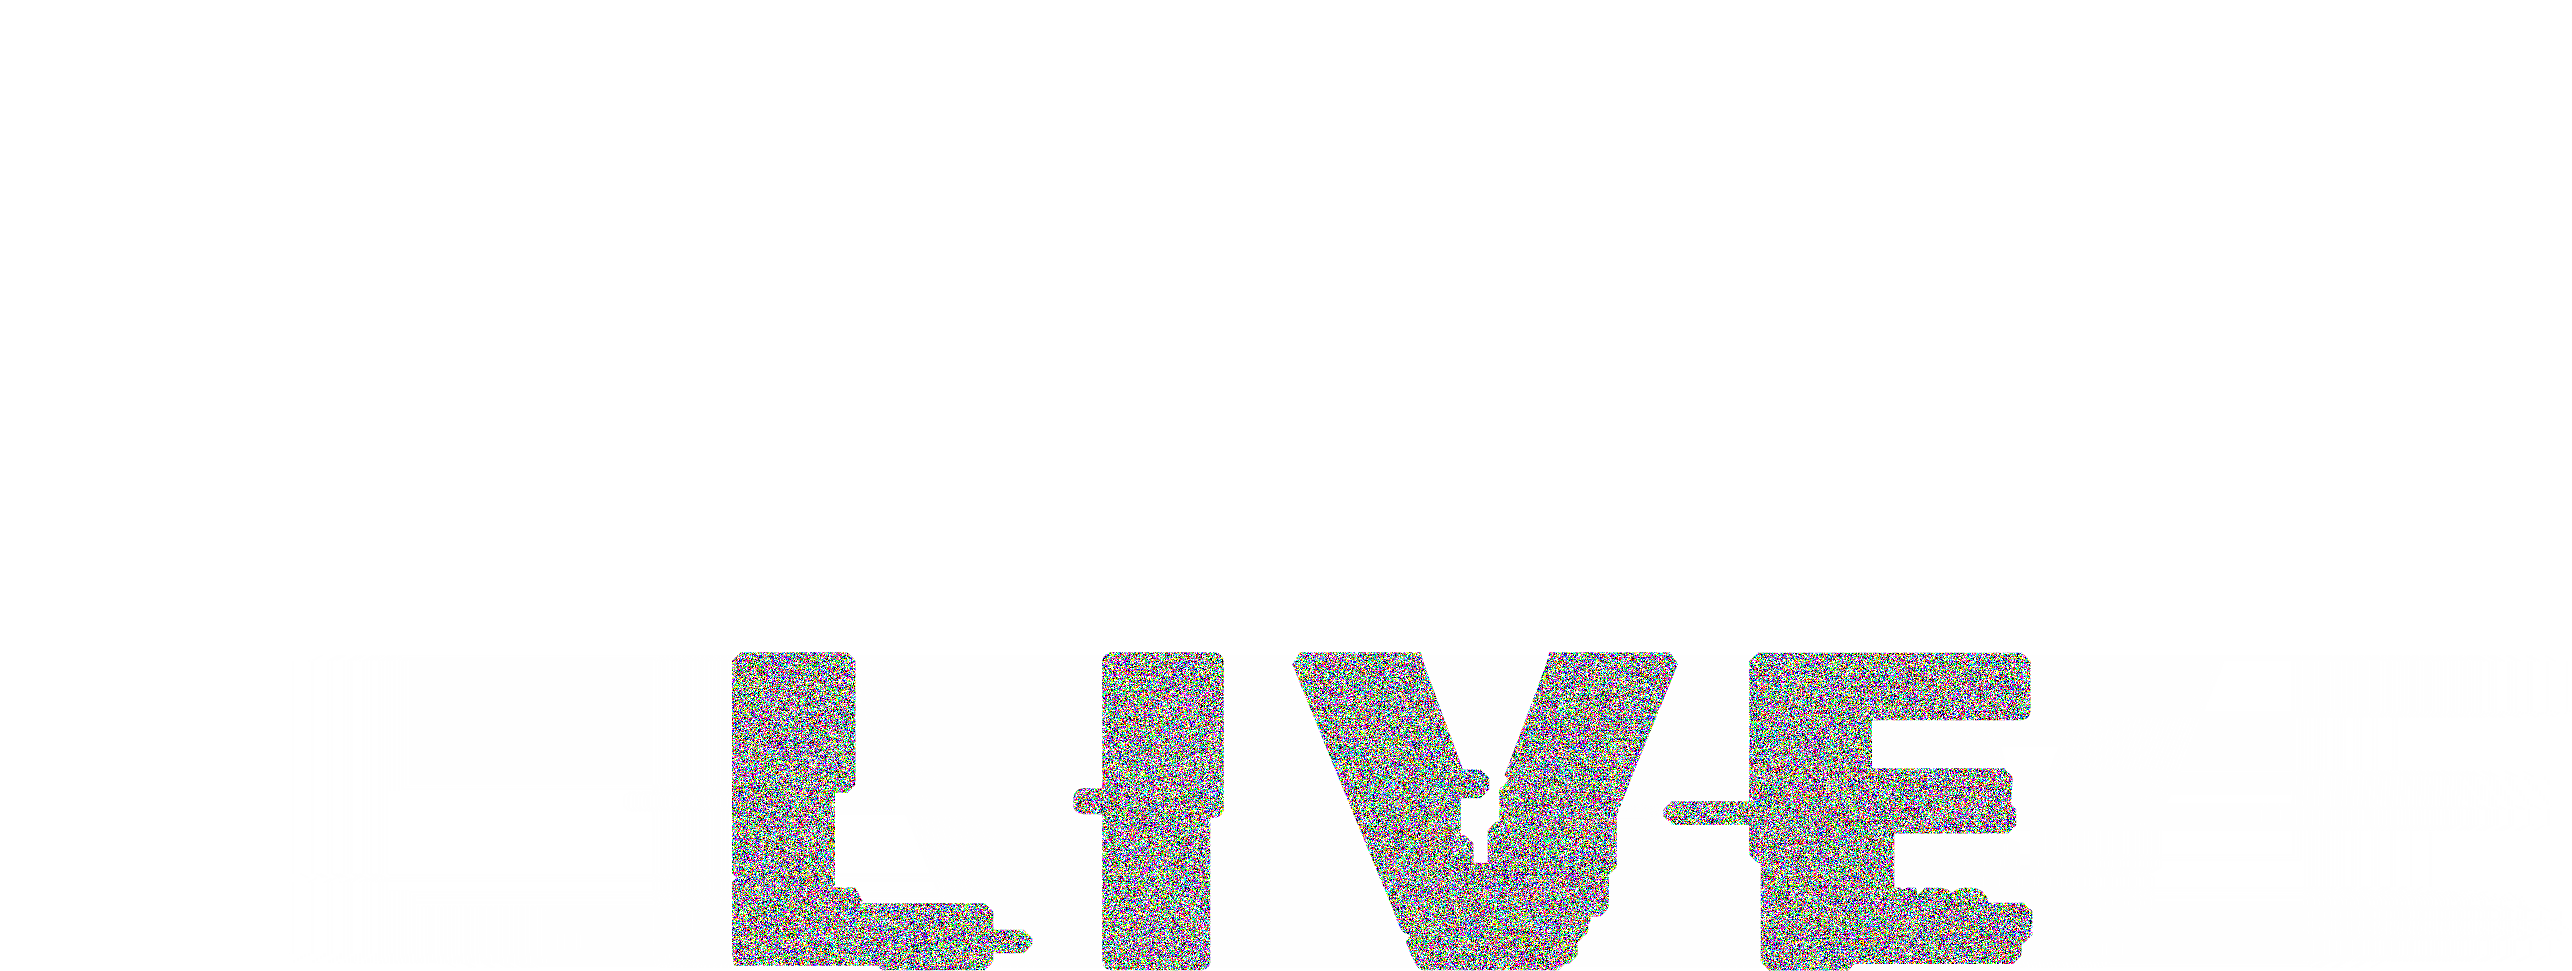 Daniel Blair